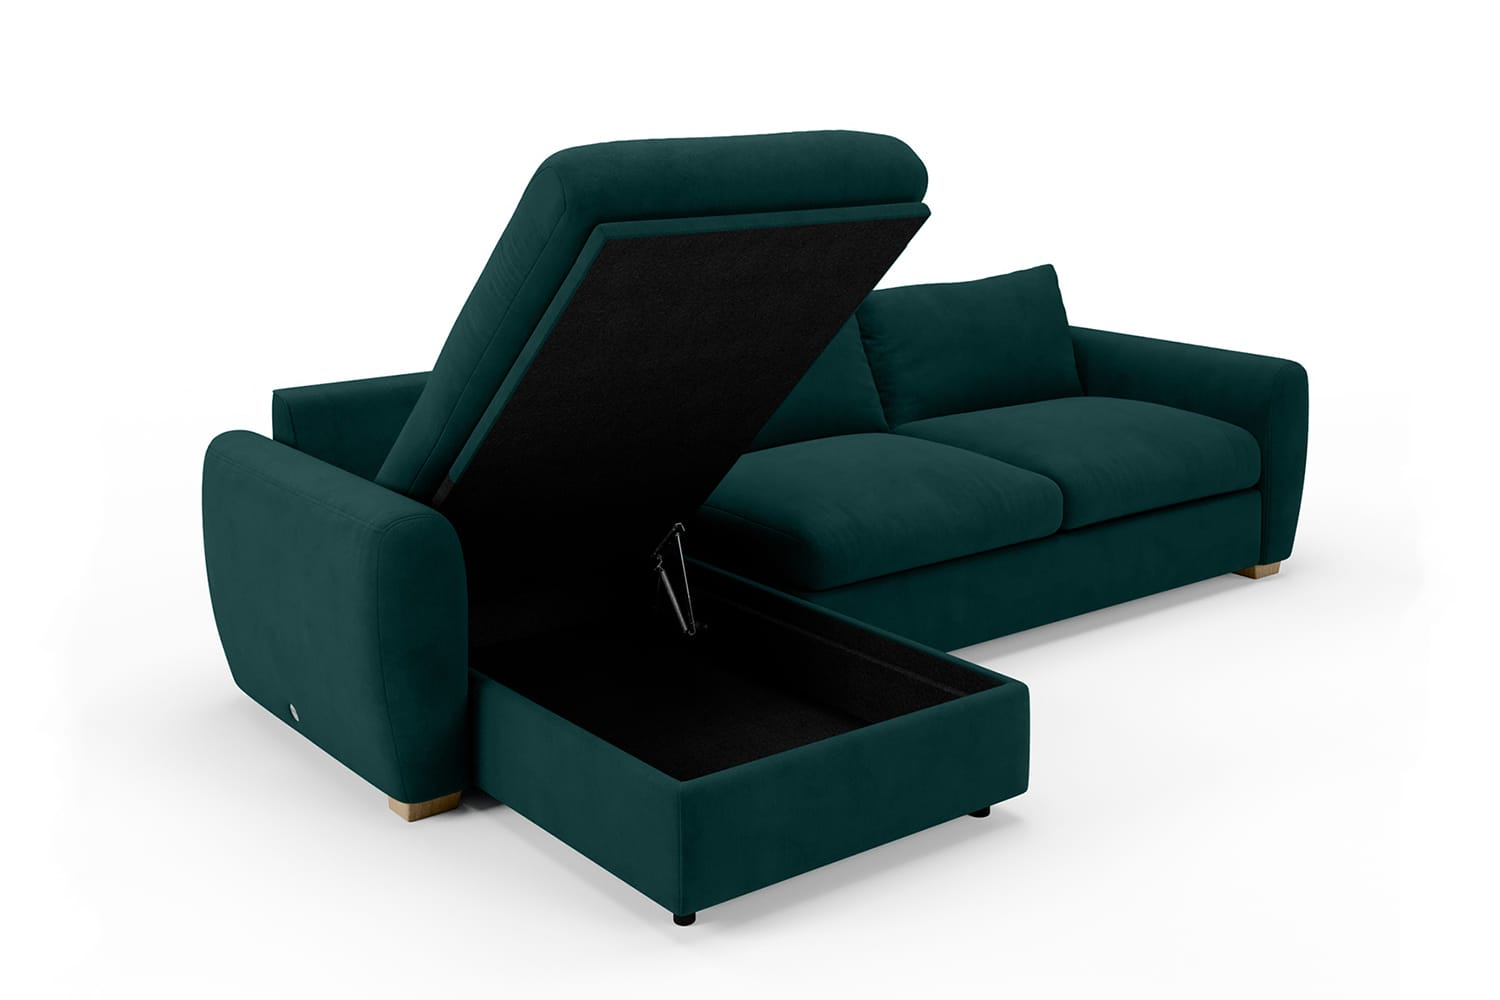 SNUG | The Cloud Sundae Chaise Corner Sofa in Pine Green variant_40414969659440